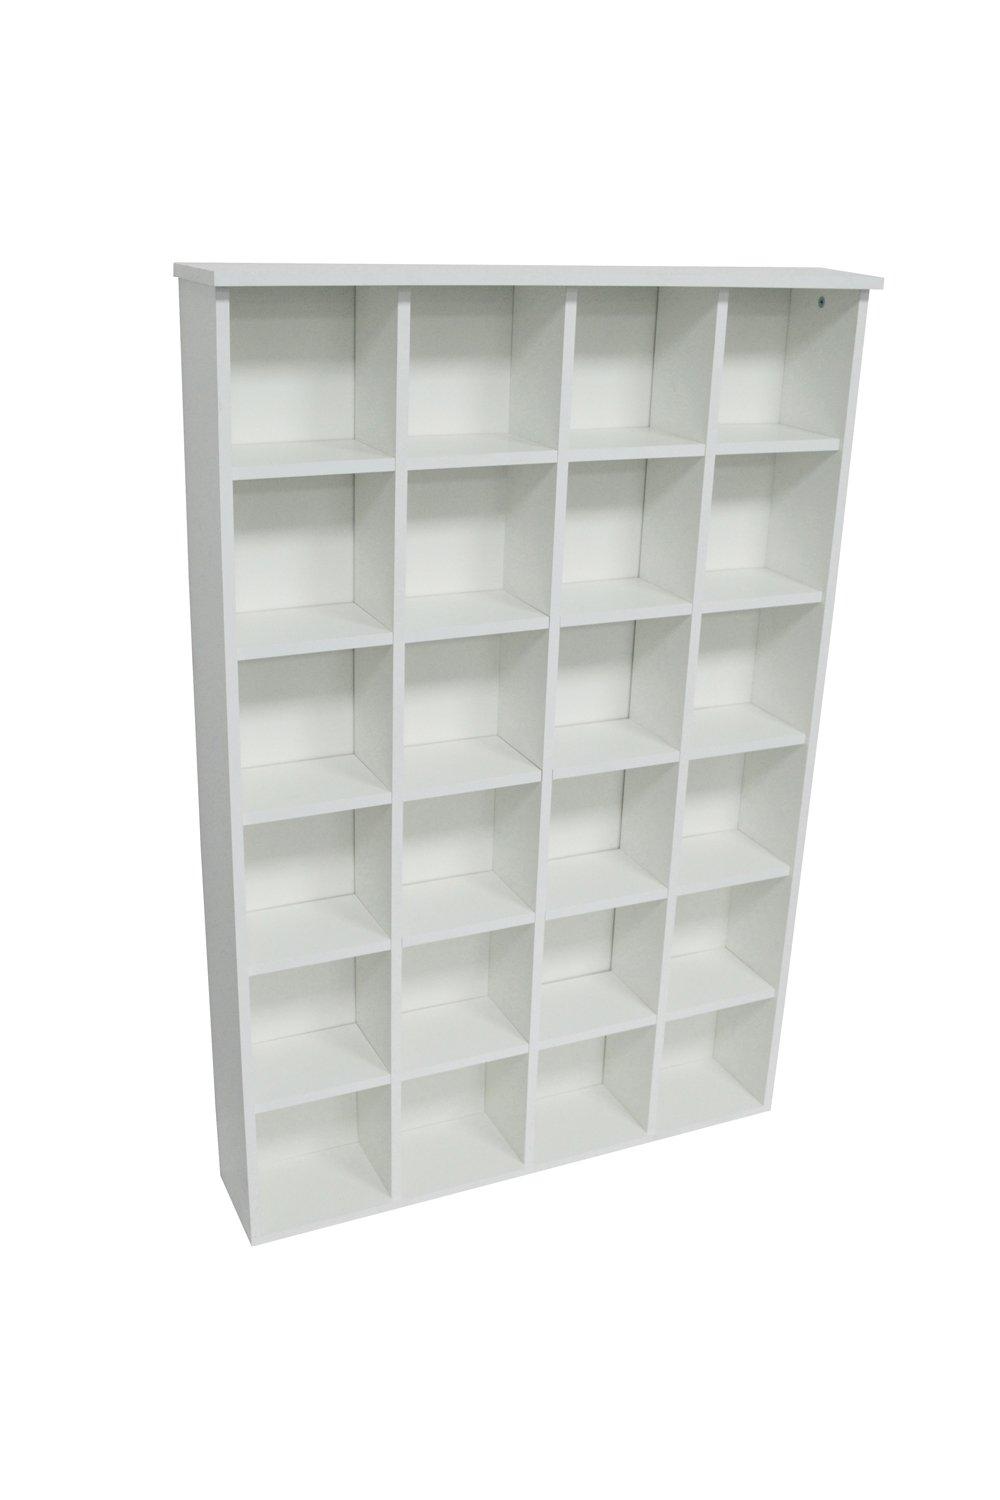 Pigeon Hole - 480 Cd / 312 Dvd Blu-ray Media Cubby Storage Shelves - White